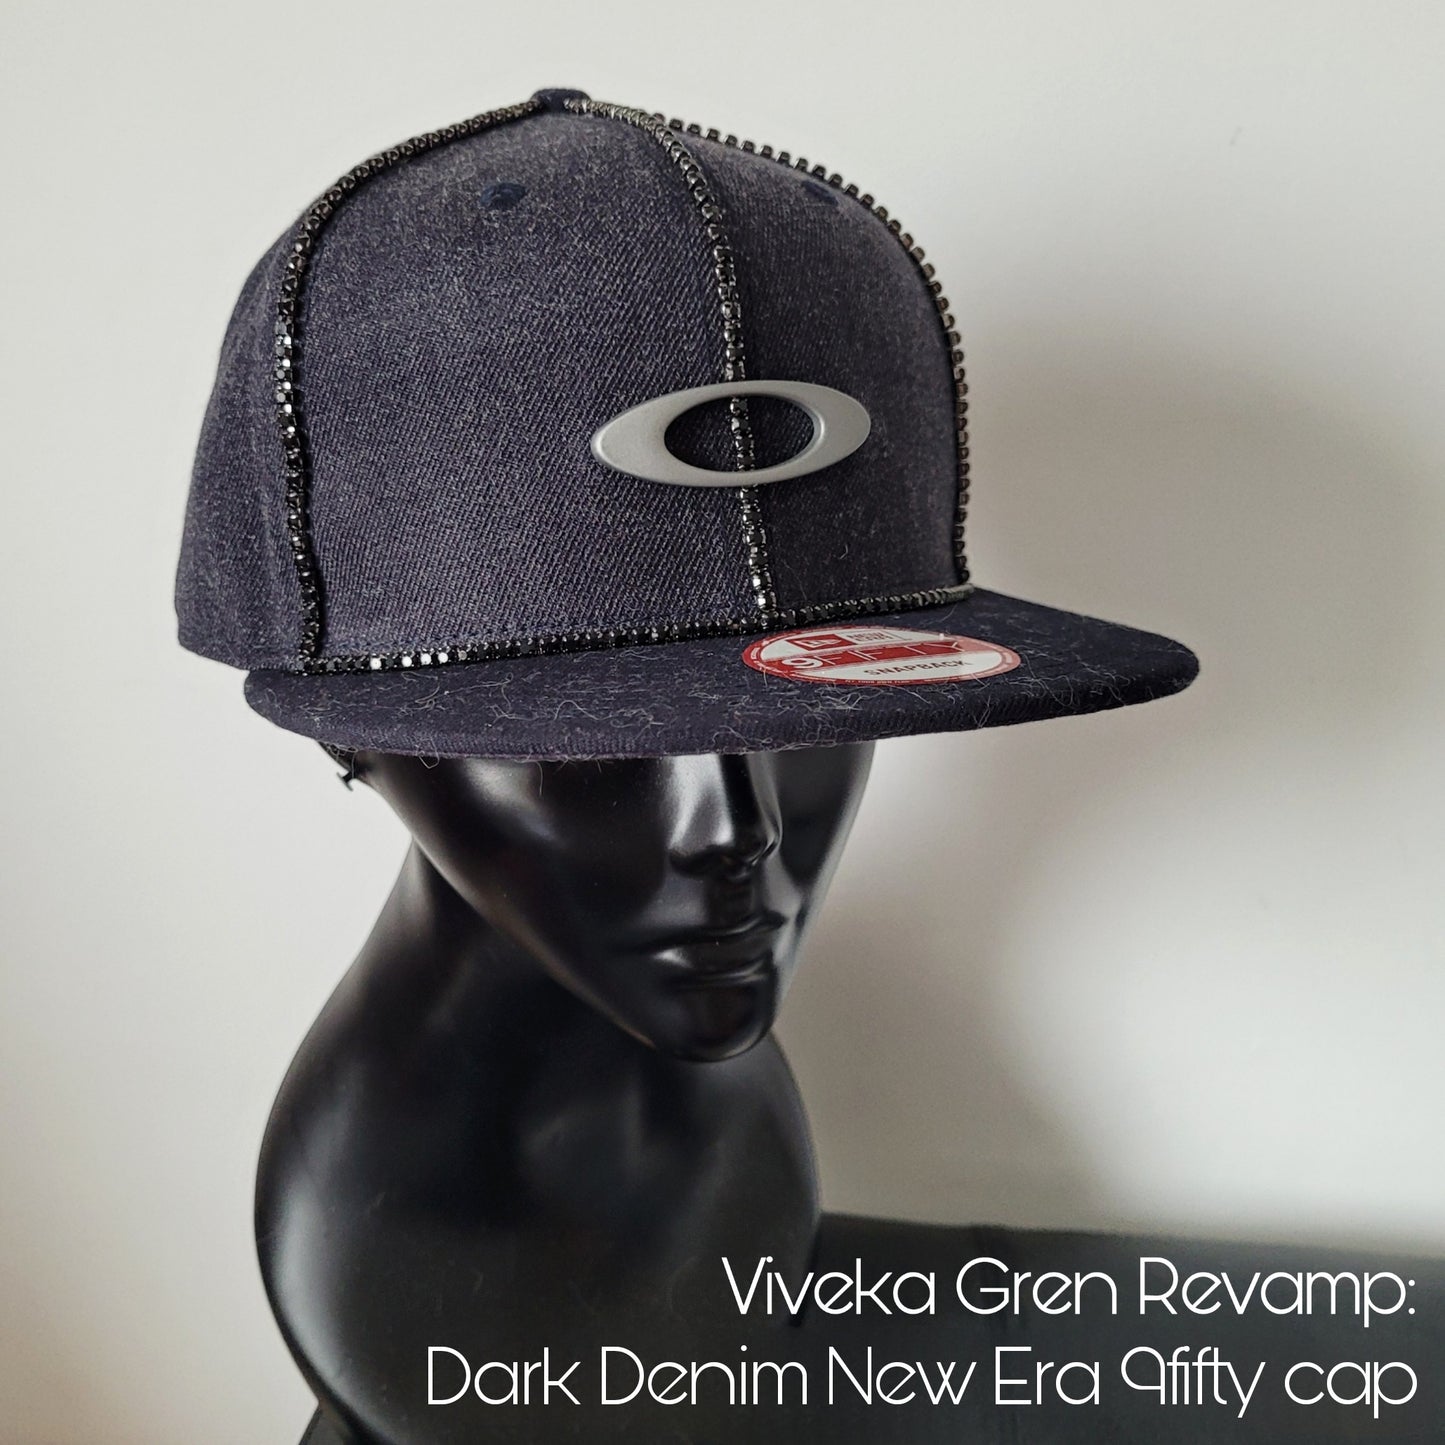 Viveka Gren Revamp: Dark Demin New Era 9fifty cap